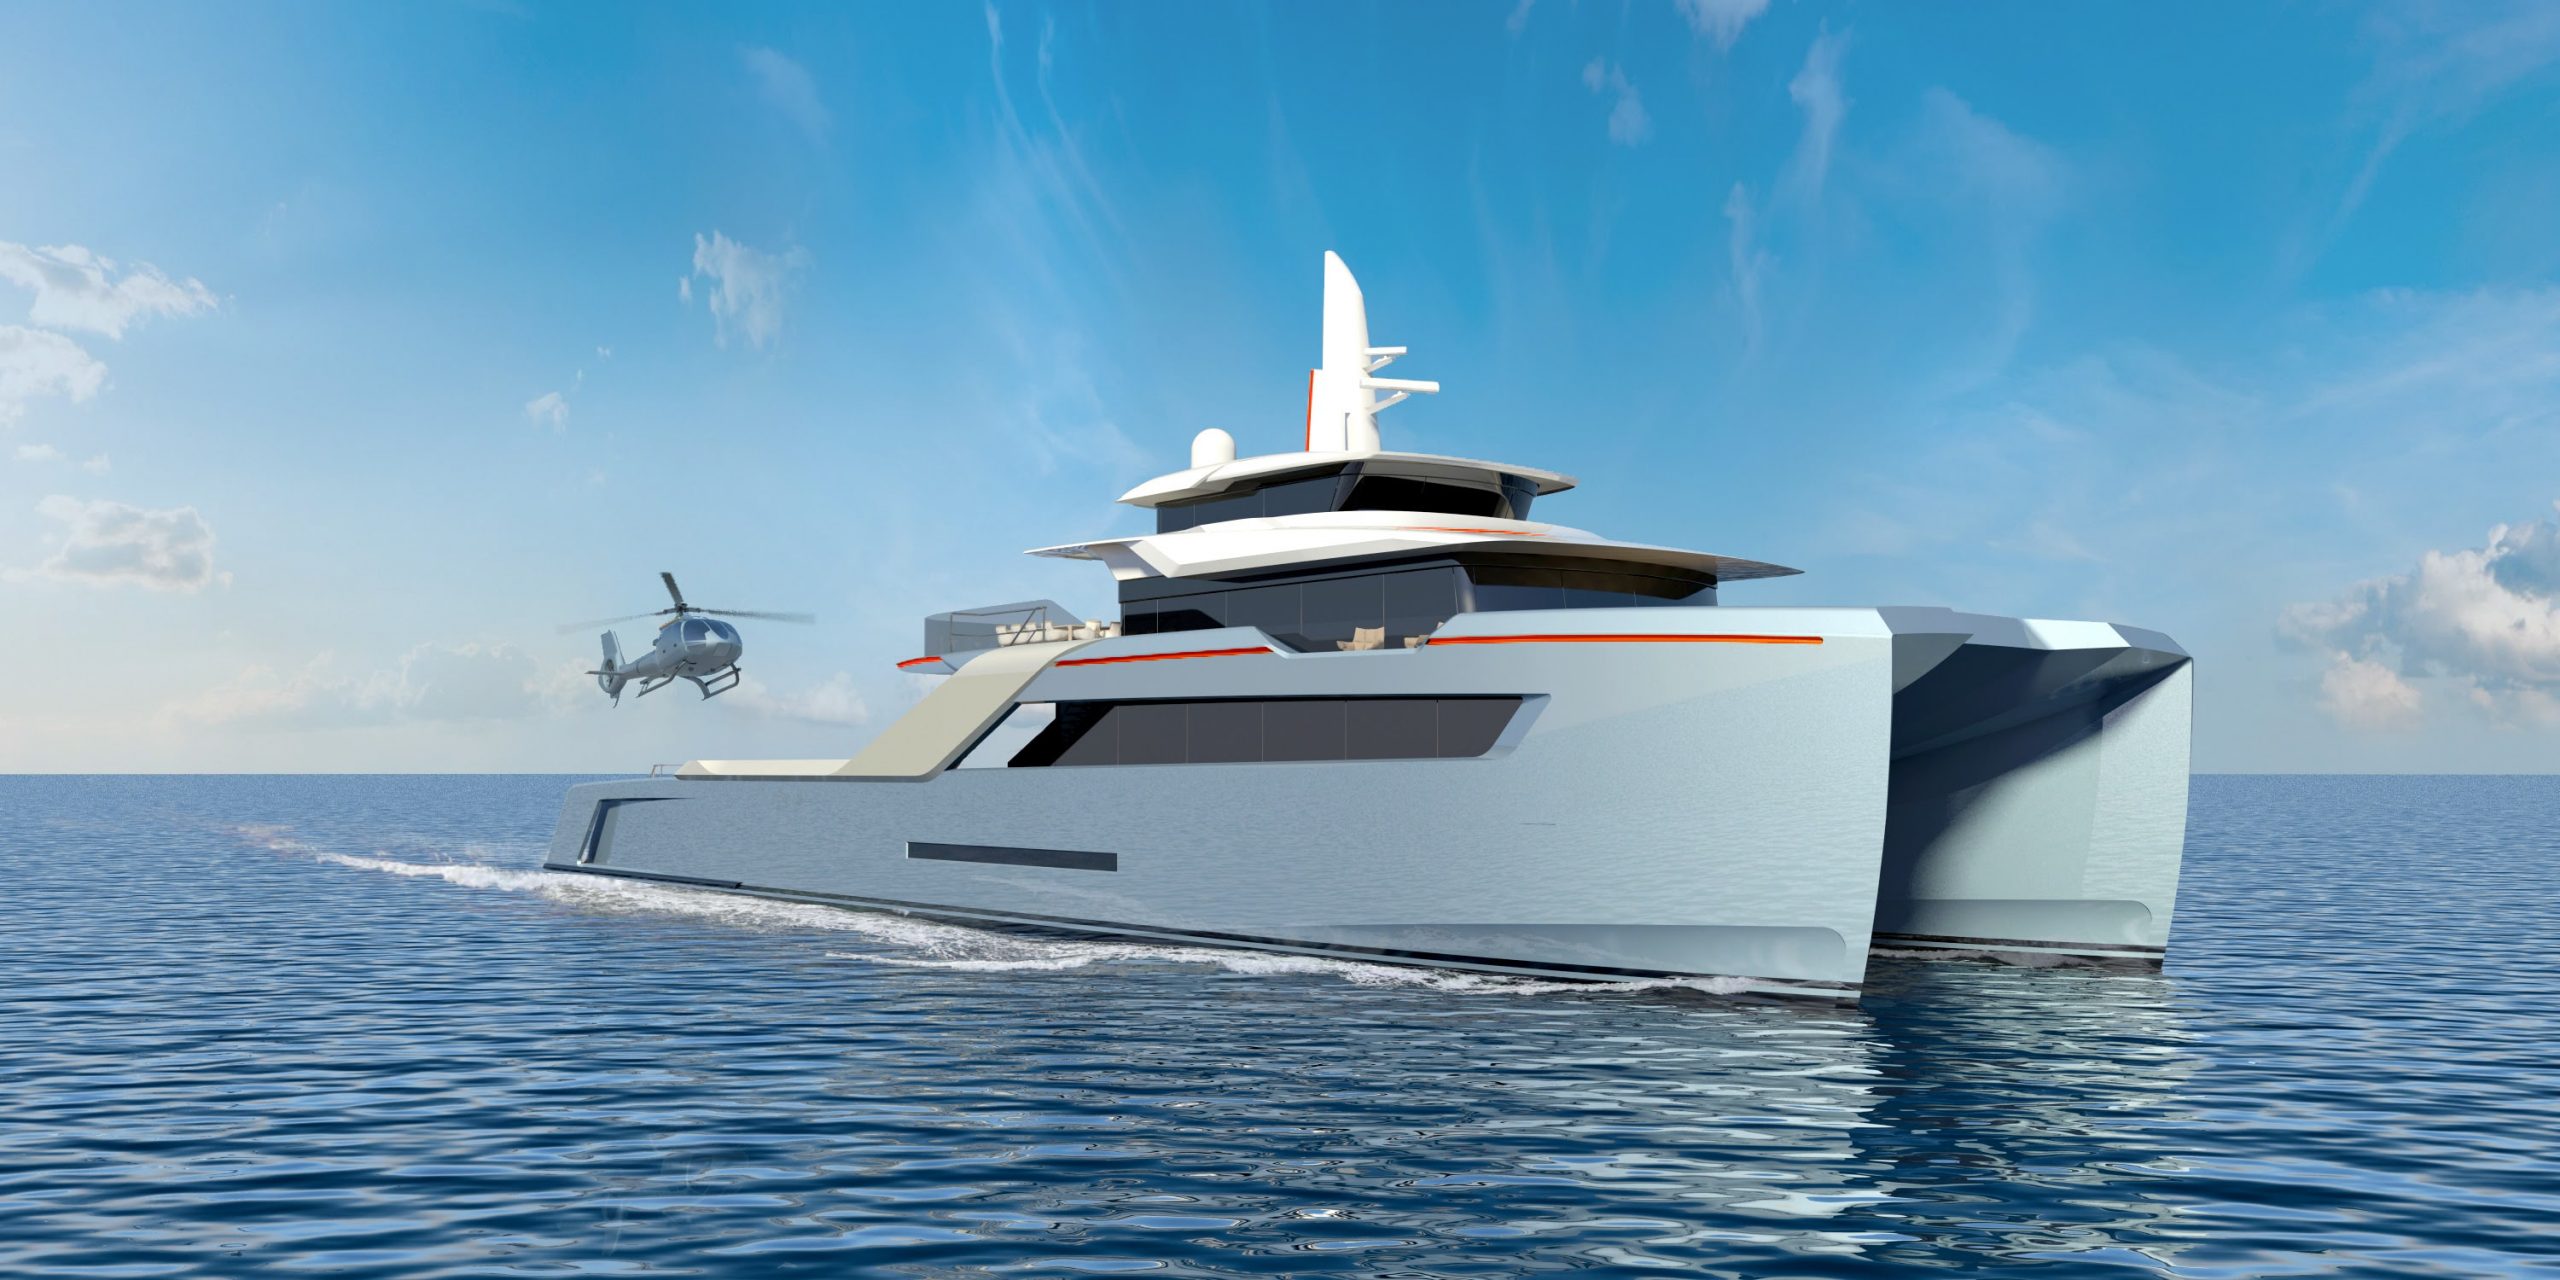 Echo Yachts Superiate HSV apoio humanitário - boat shopping